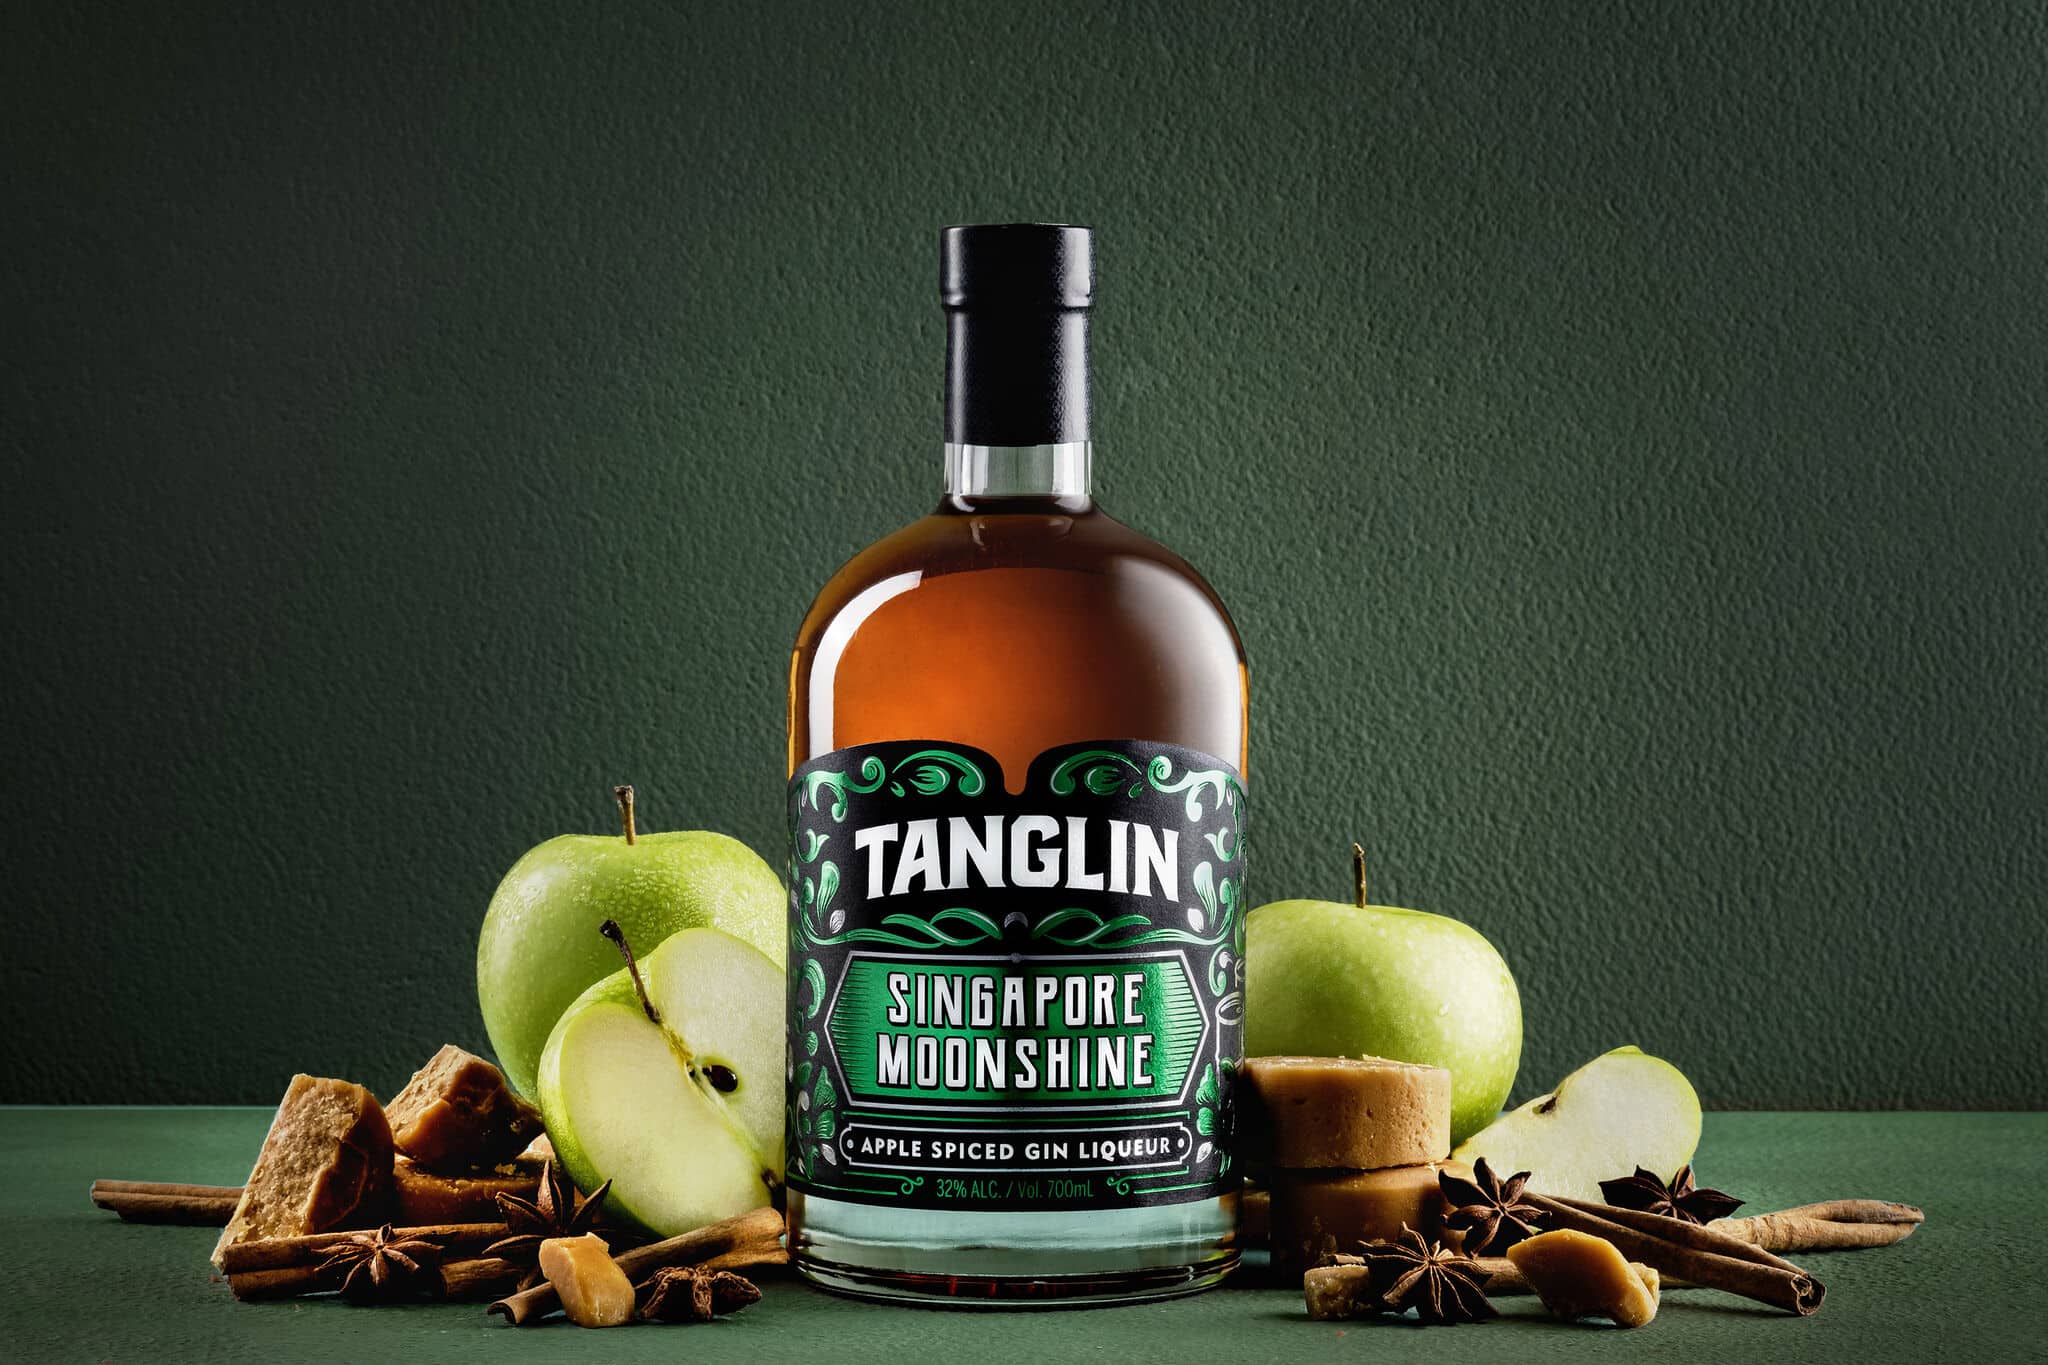 Tanglin Gin Singapore Moonshine